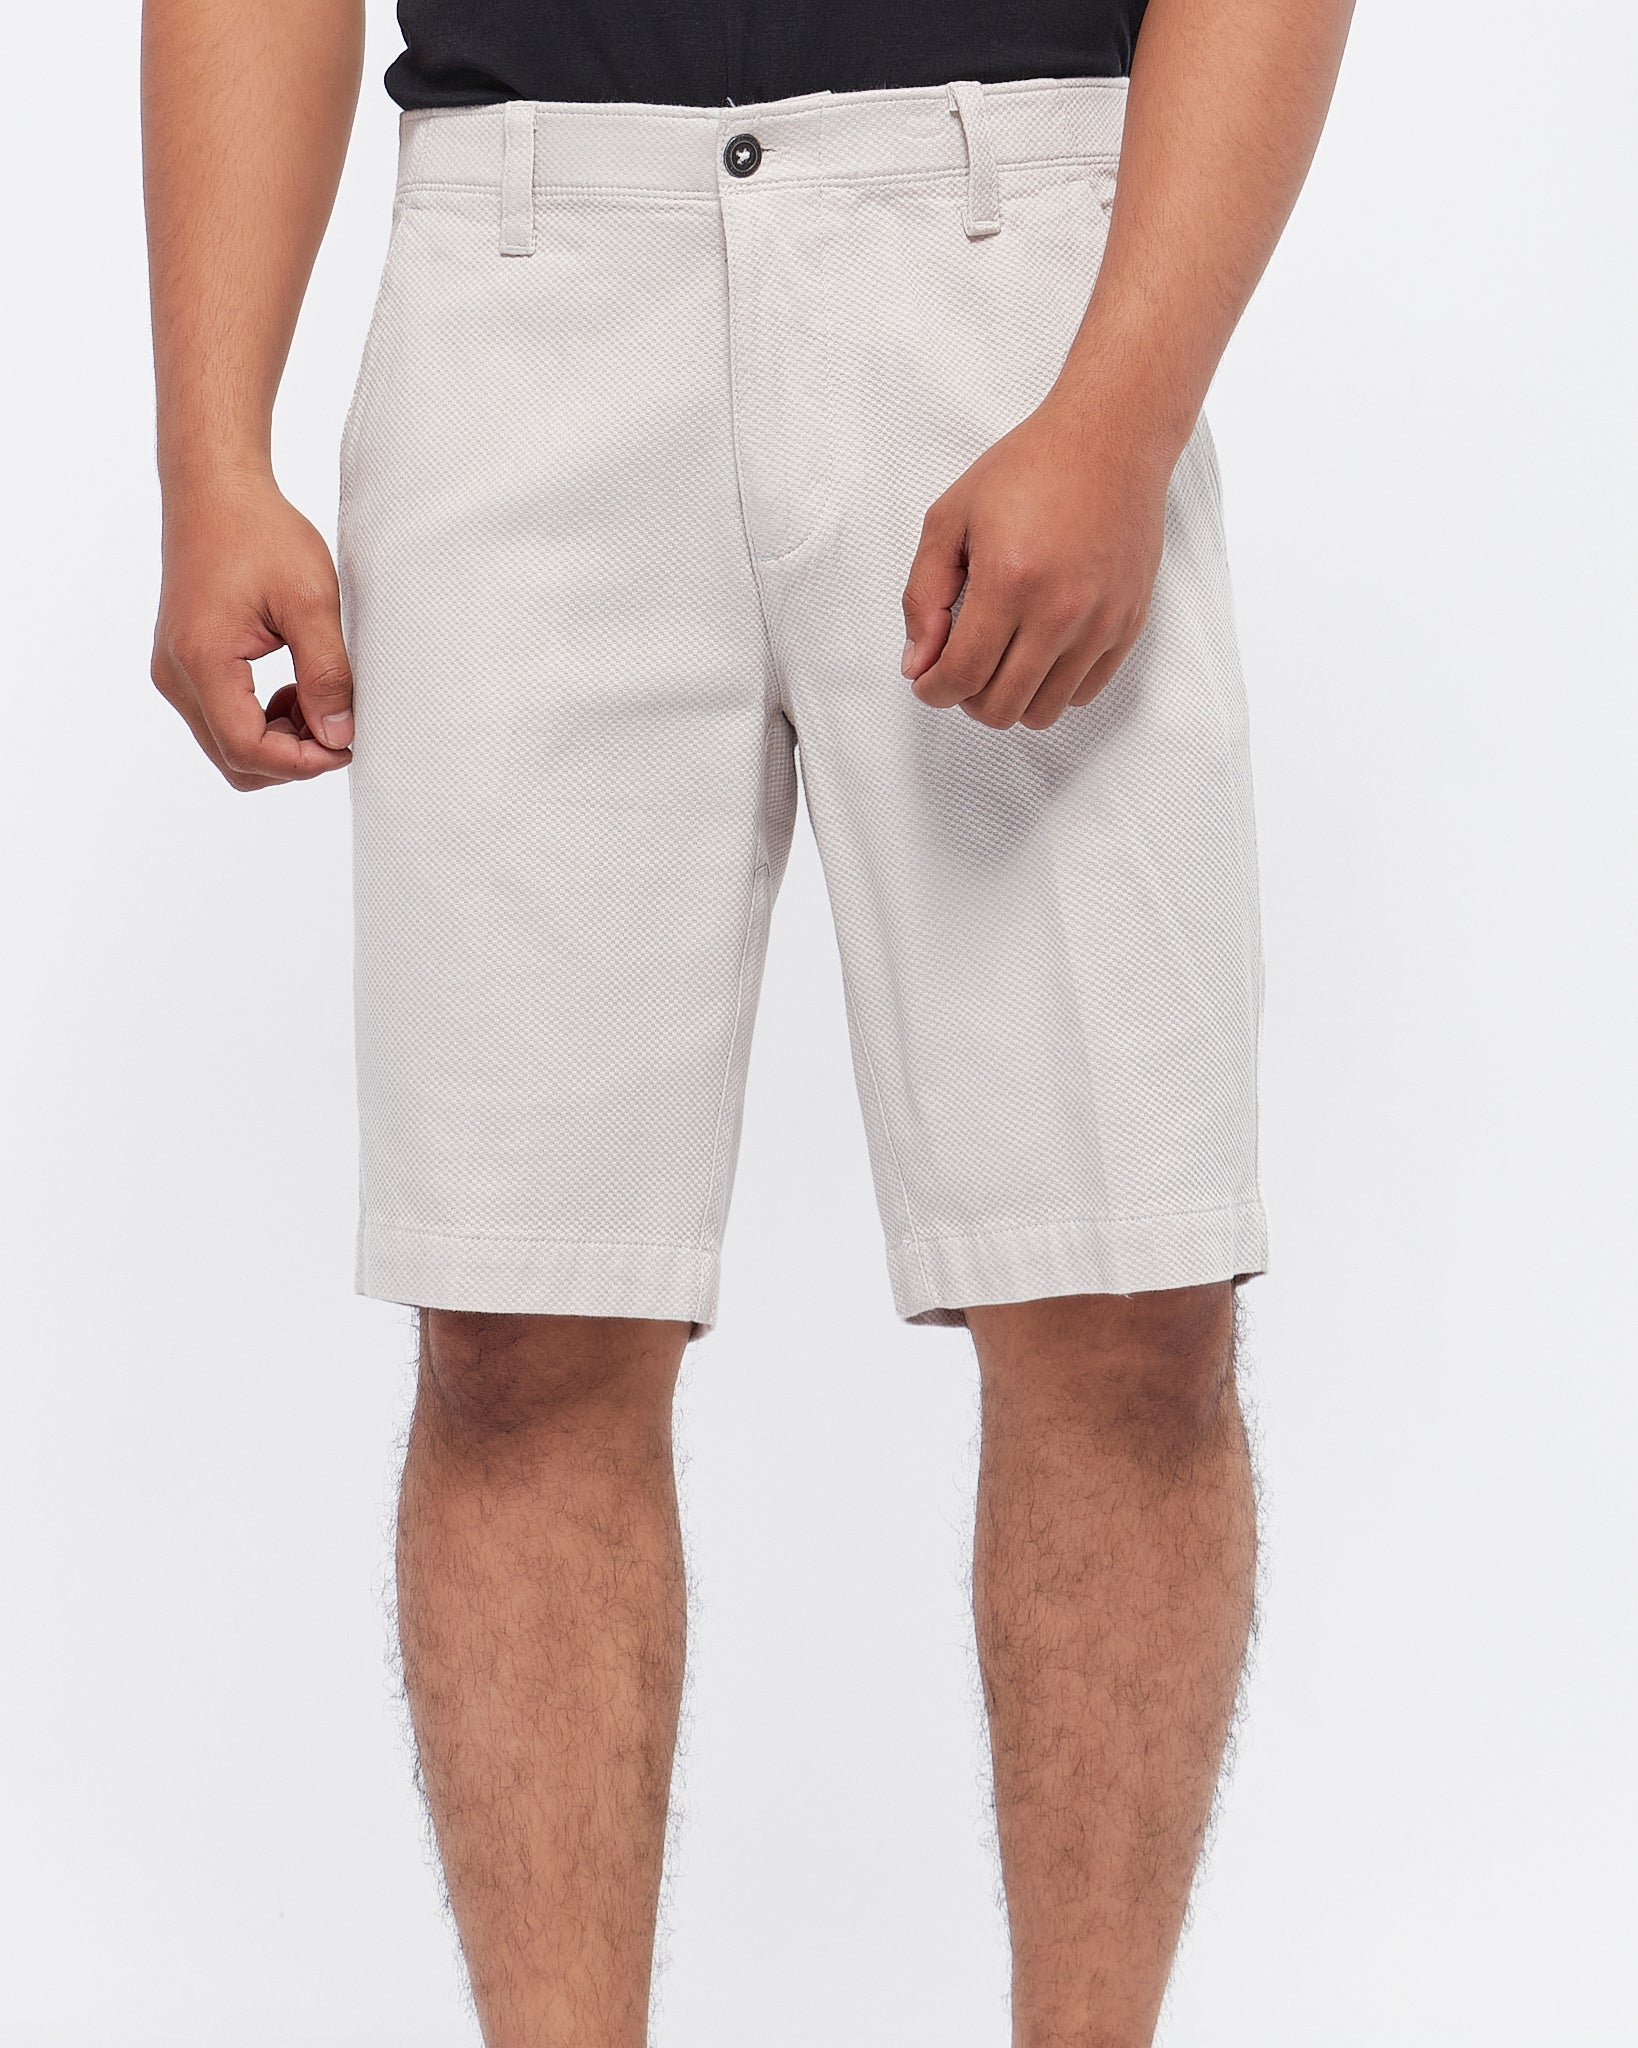 Men Cargo Shorts Sports Soft Cool Dry Casual Workout Beach Fashion Short  Pants | eBay